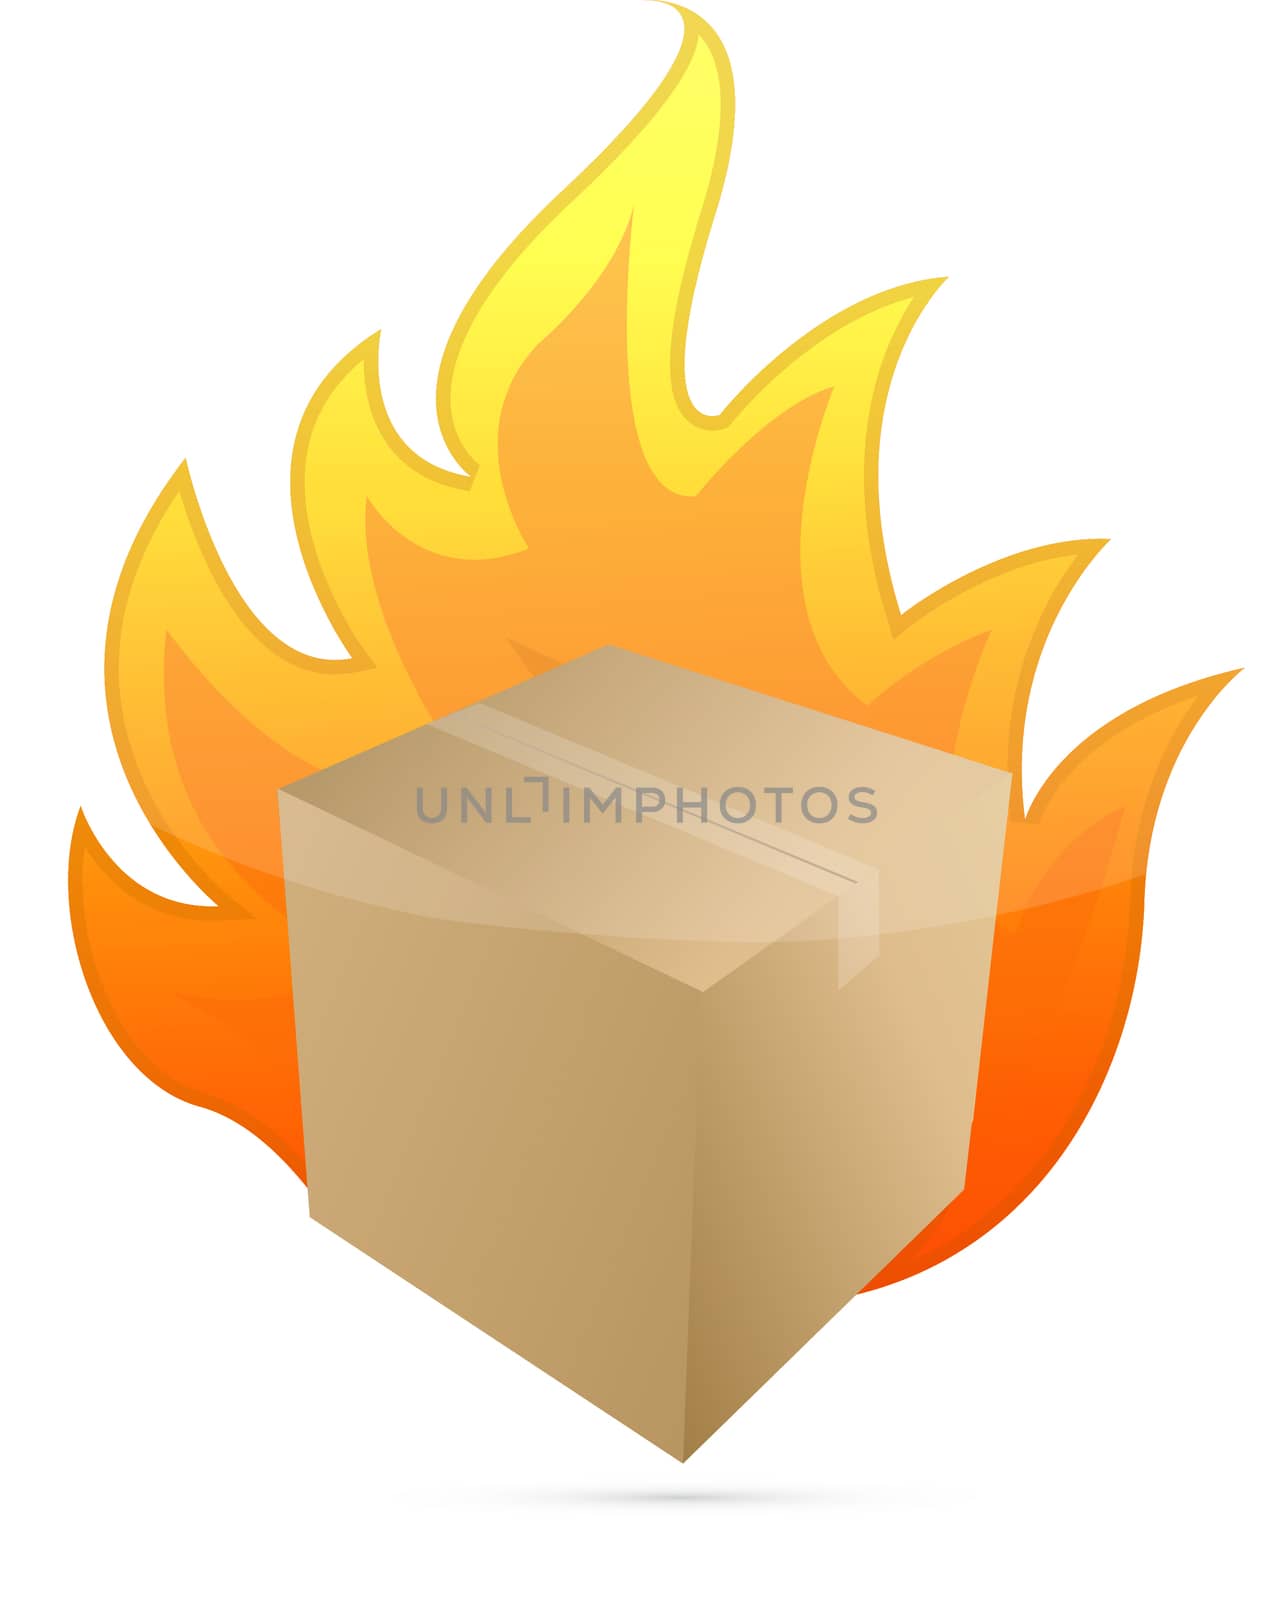 box on fire illustration design on white background